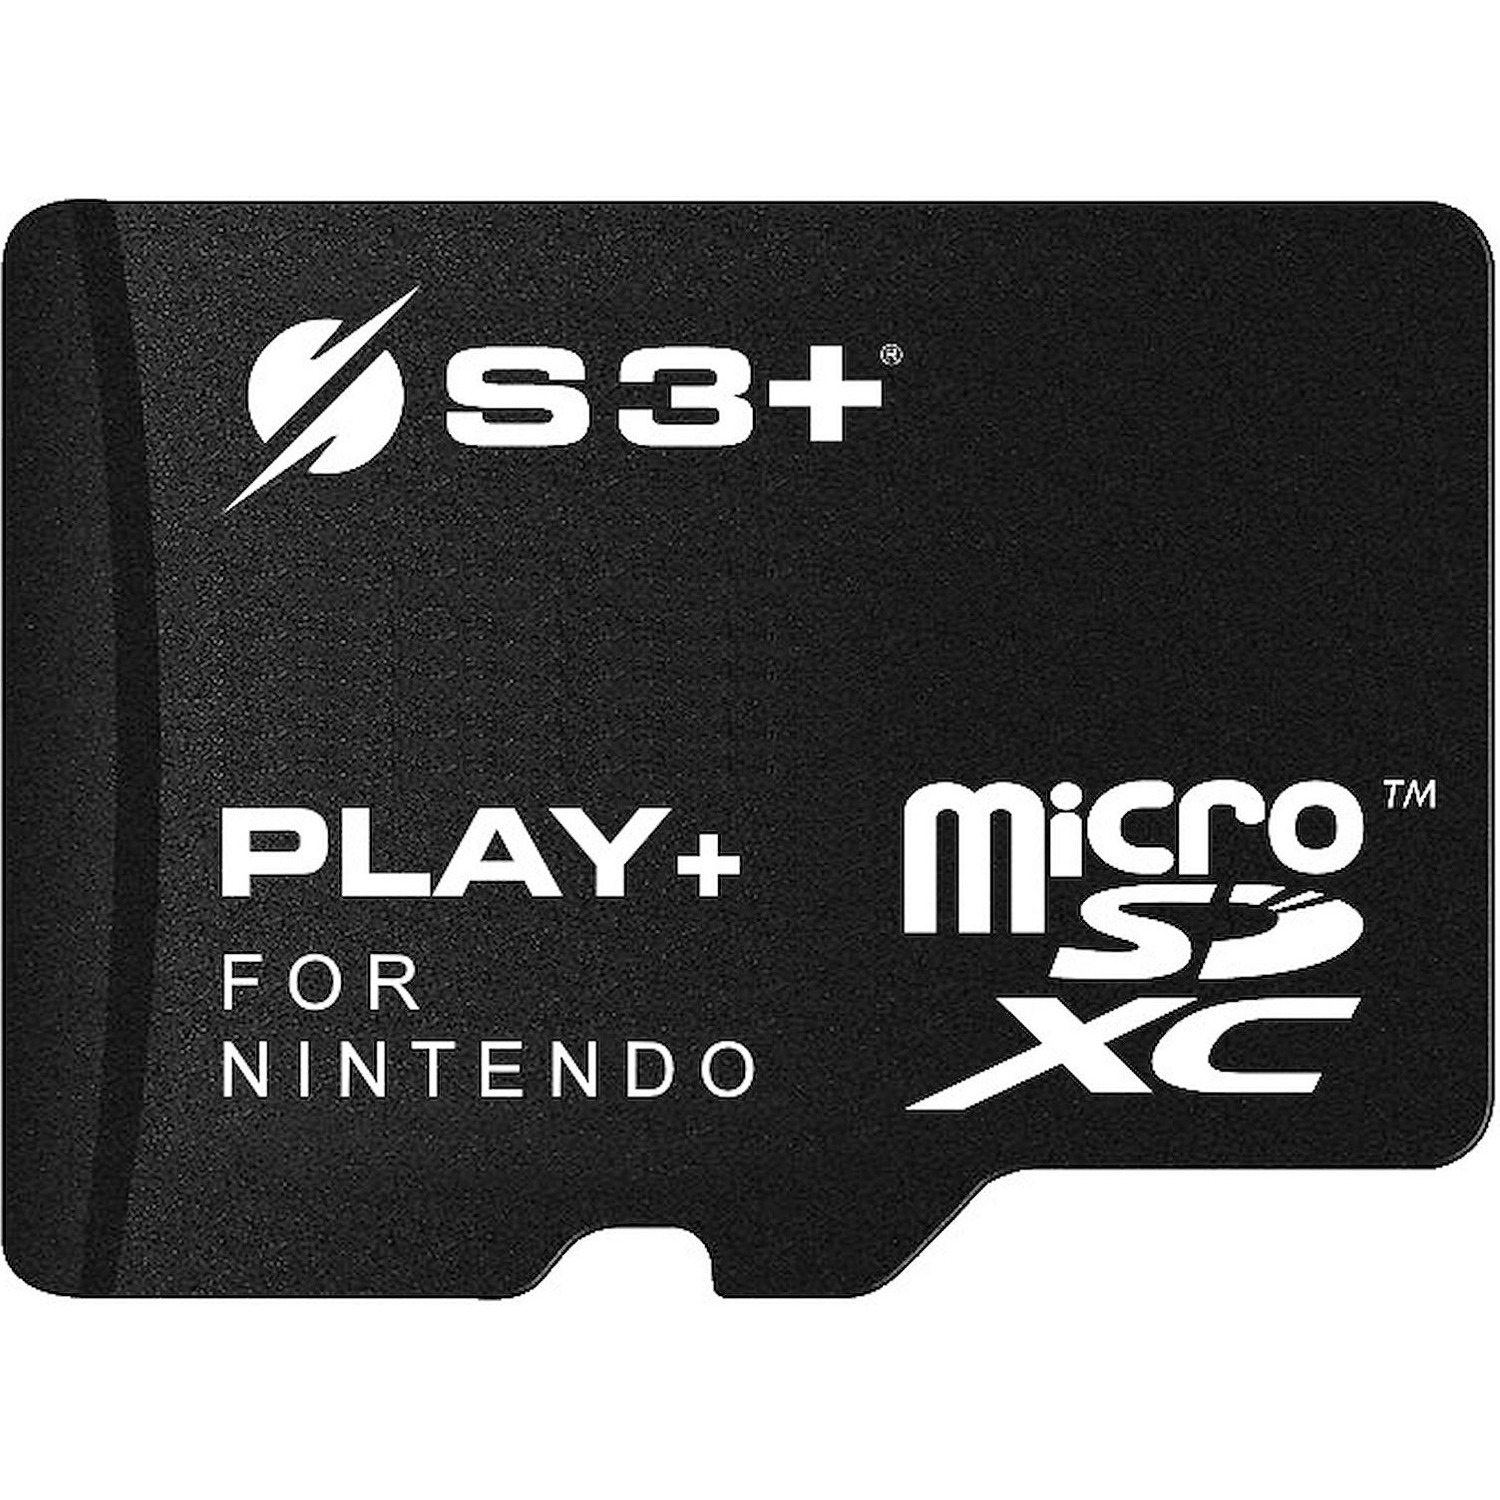 Immagine per MicroSD S3+ 256GB PLAY+ U3 V30 CL10 per Nintendo  Switch / Lite da DIMOStore